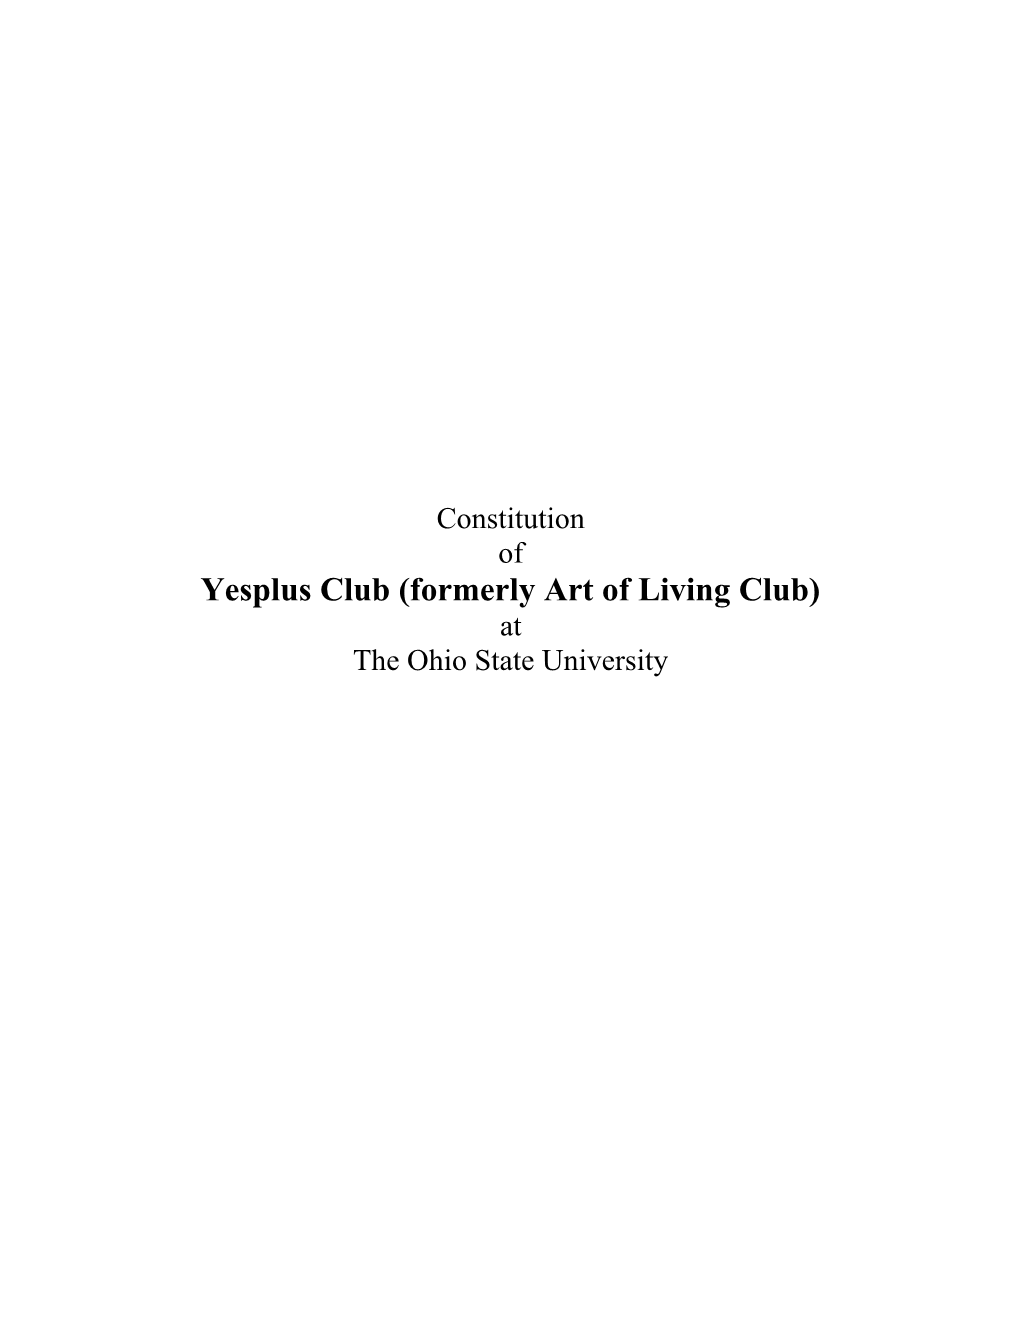 Yesplus Club (Formerly Art of Living Club)